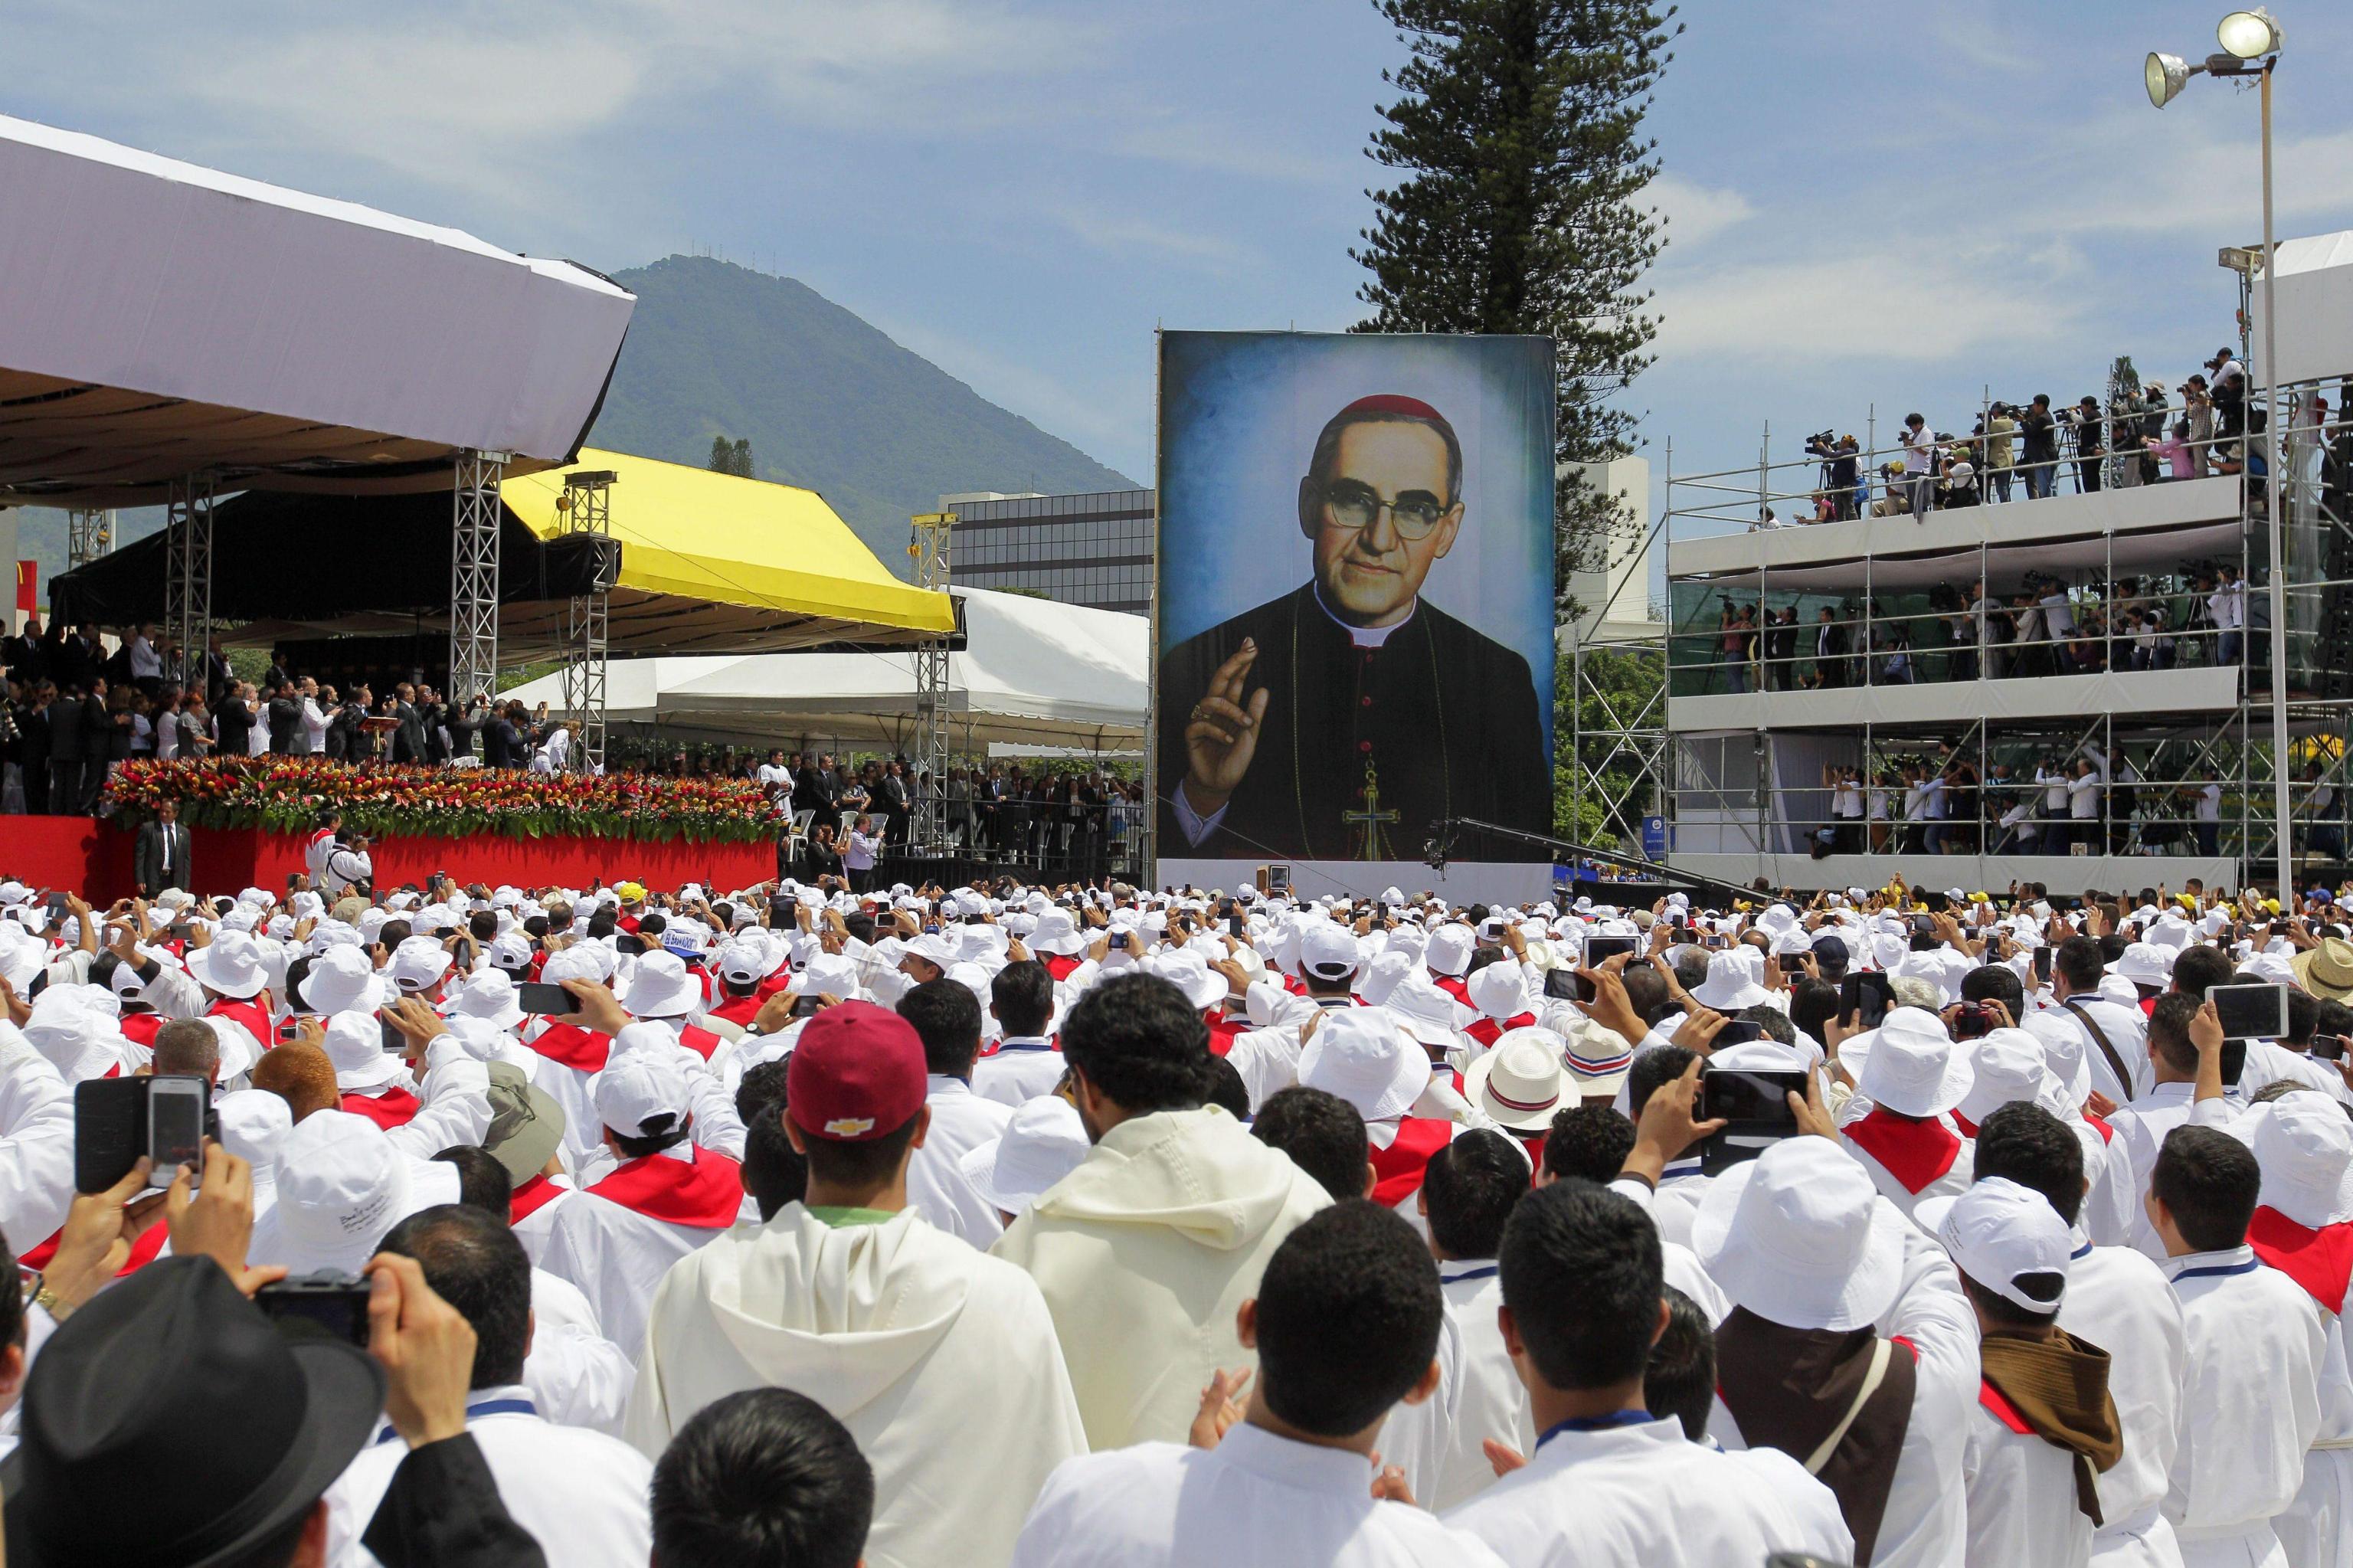 Beatification of Mons. Oscar Arnulfo Romero in San Salvador